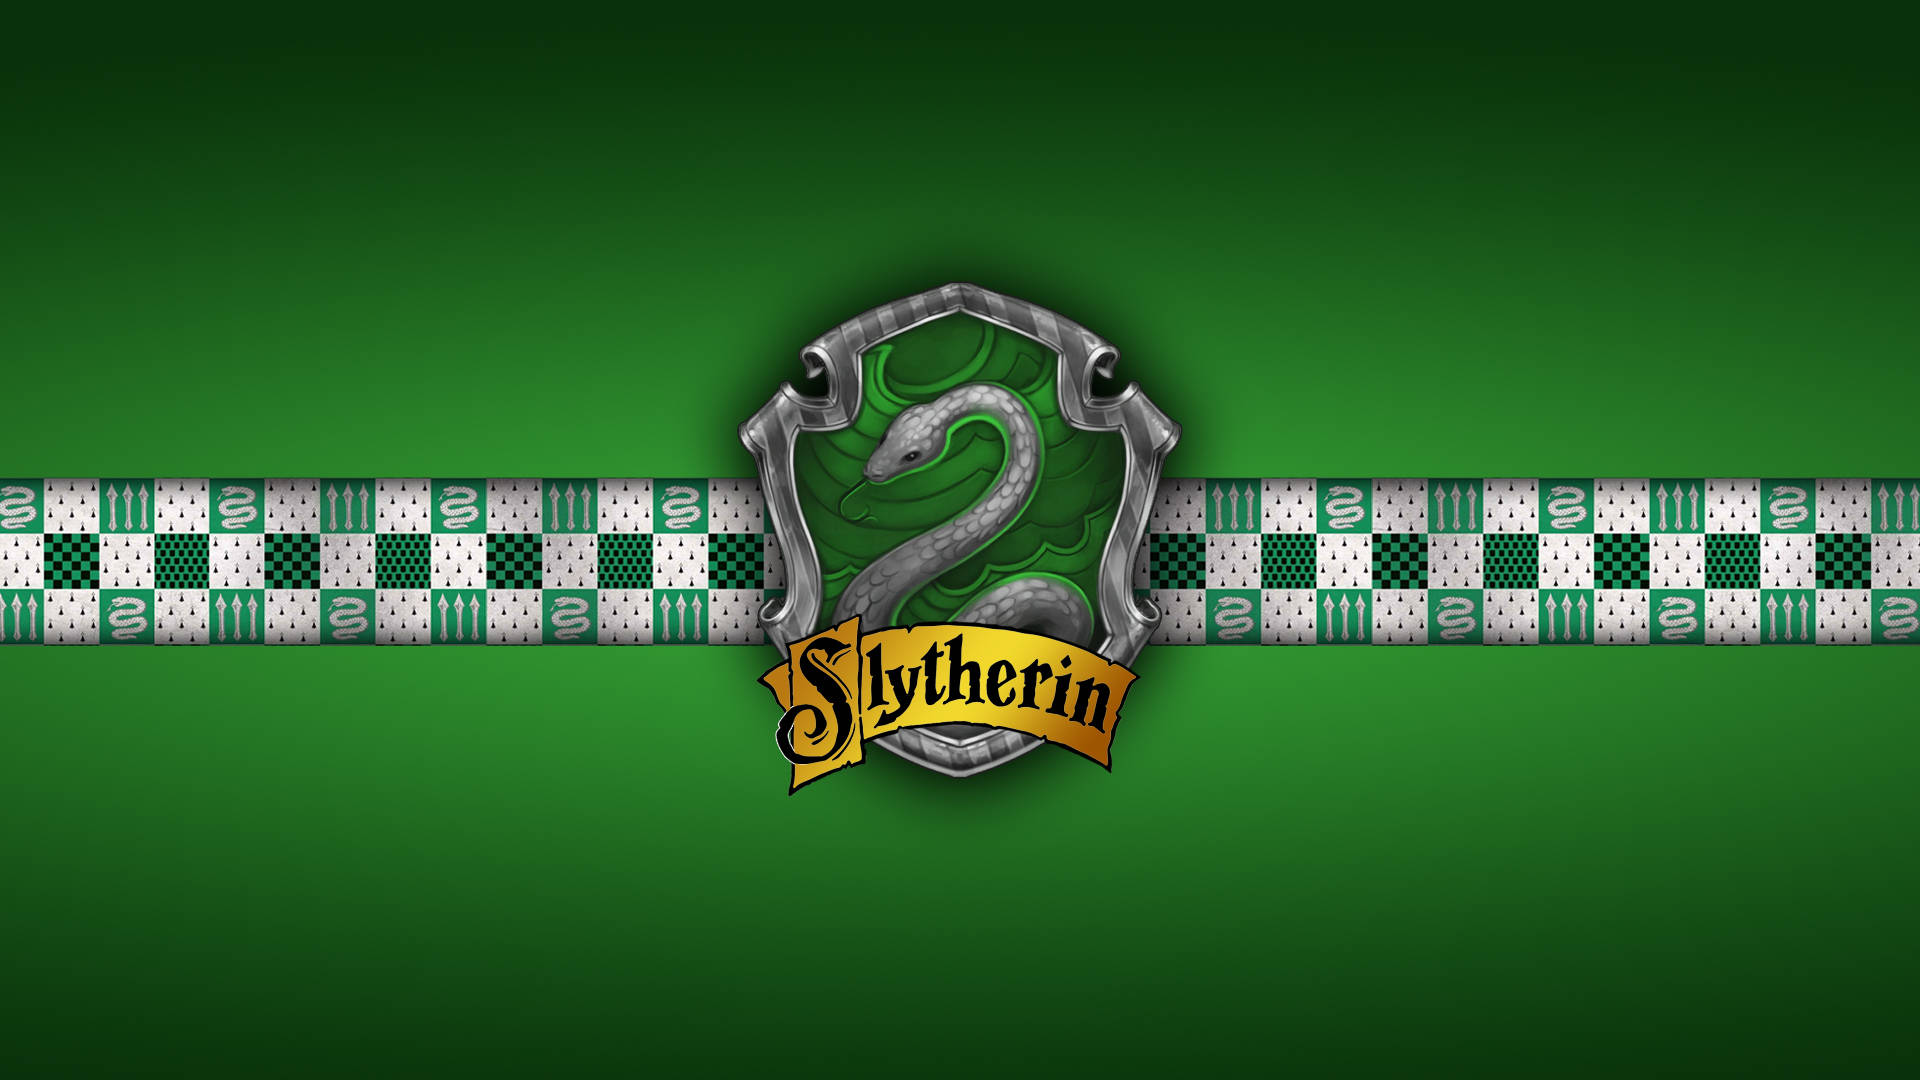 Harry Potter Houses Slytherin Green Wallpaper